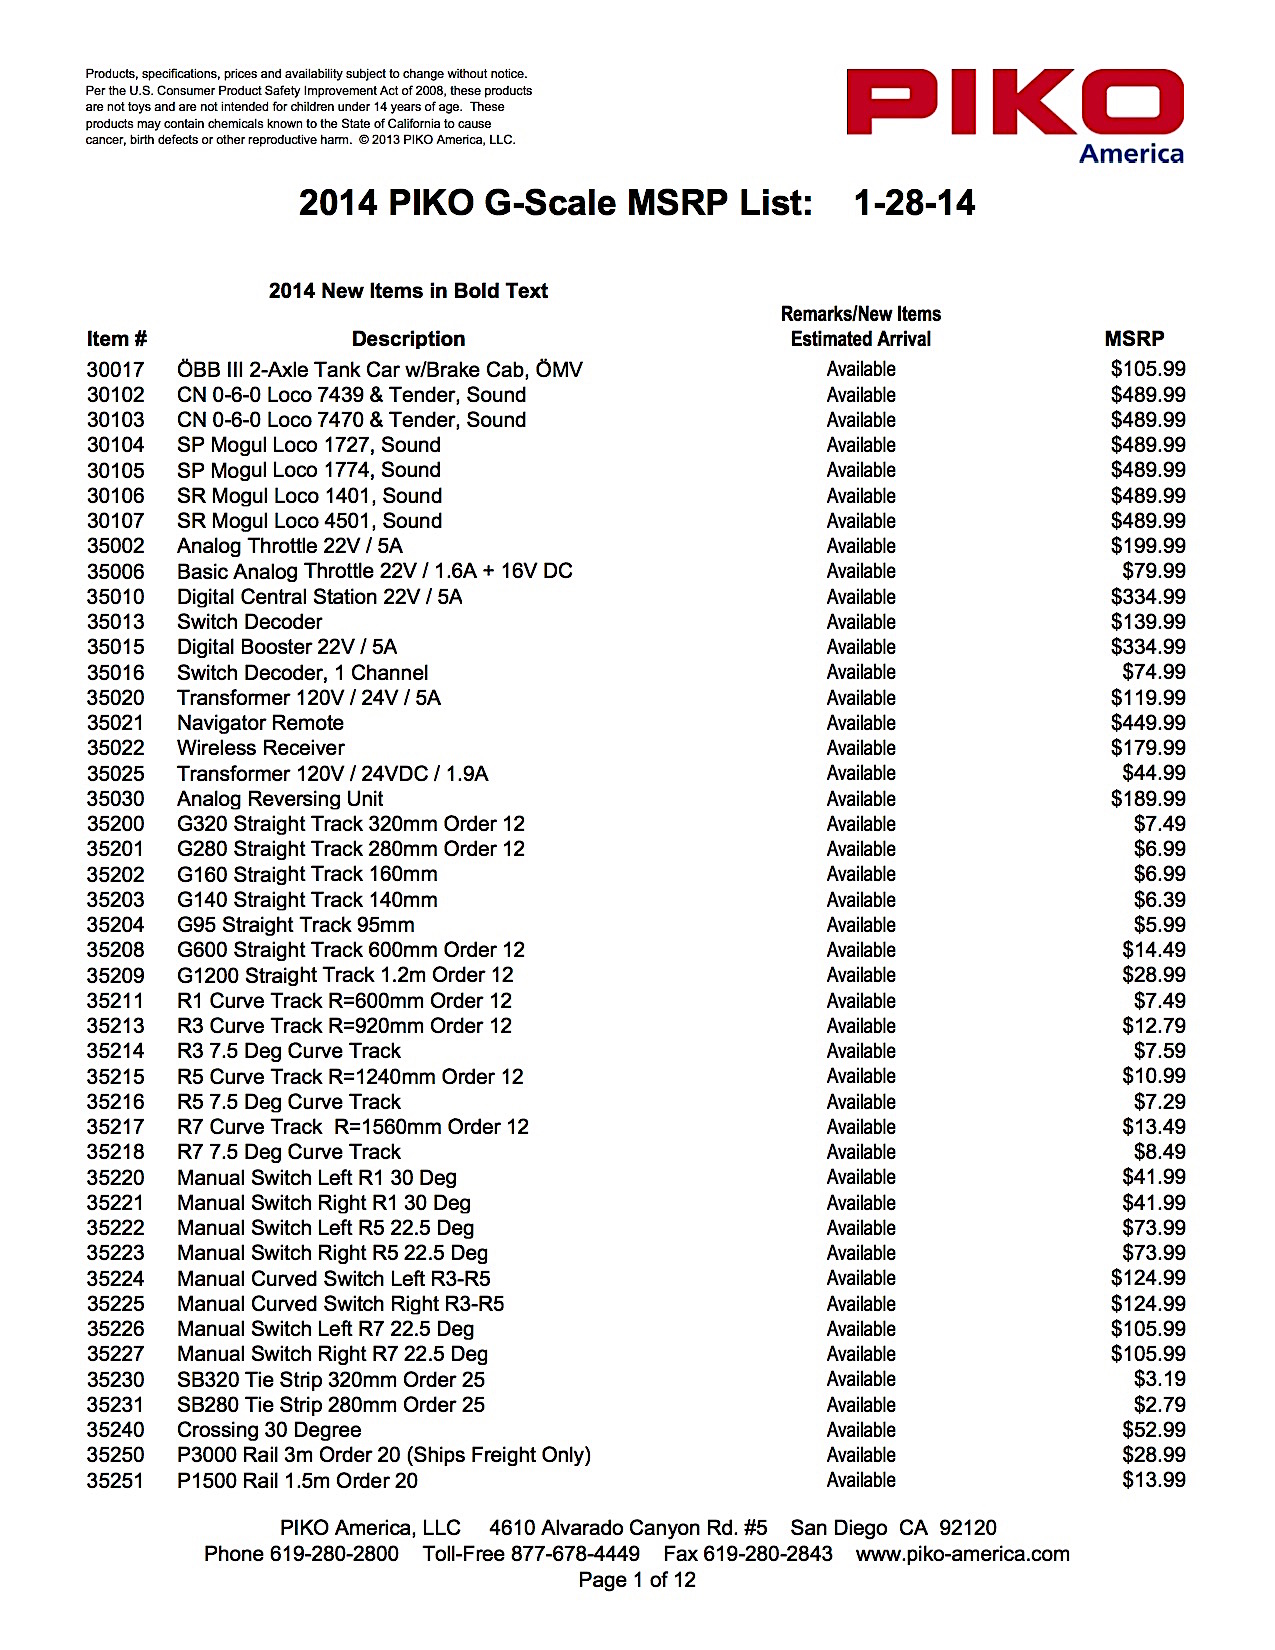 PIKO America Preisliste (Price list) 2014 January in US Dollars